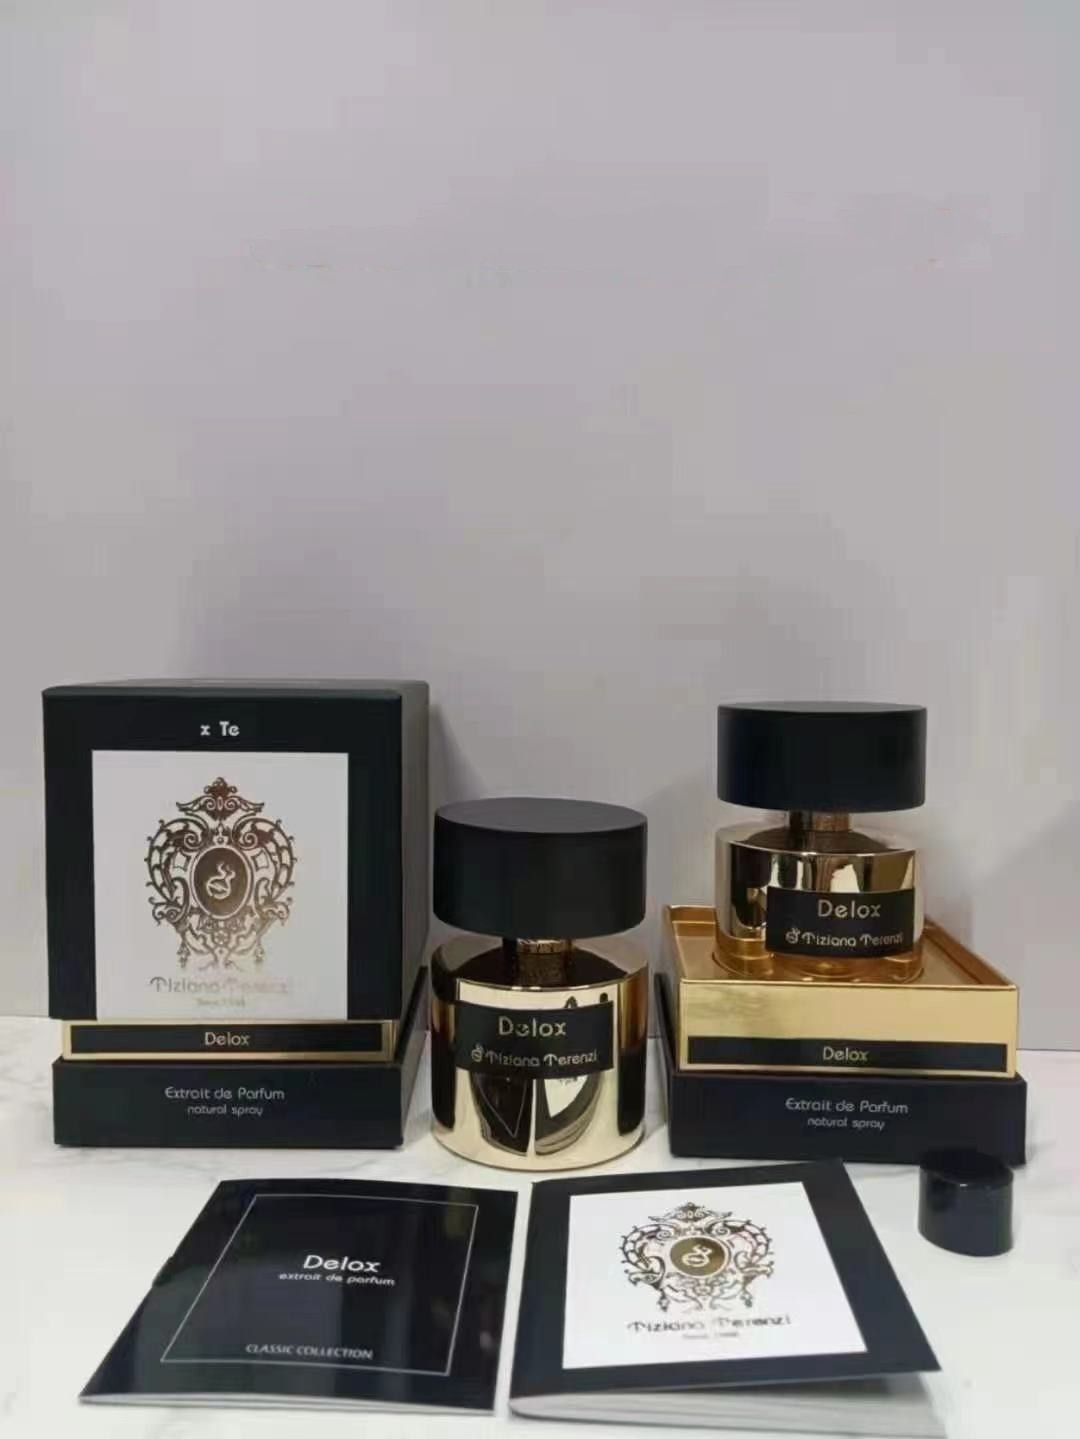 100ml Tiziana Perfume Fragrance Spirito Fiorentino Delox Kirke Gold Rose Oudh Draco Ursa Orion Suitable  Spray Cologne Parfum